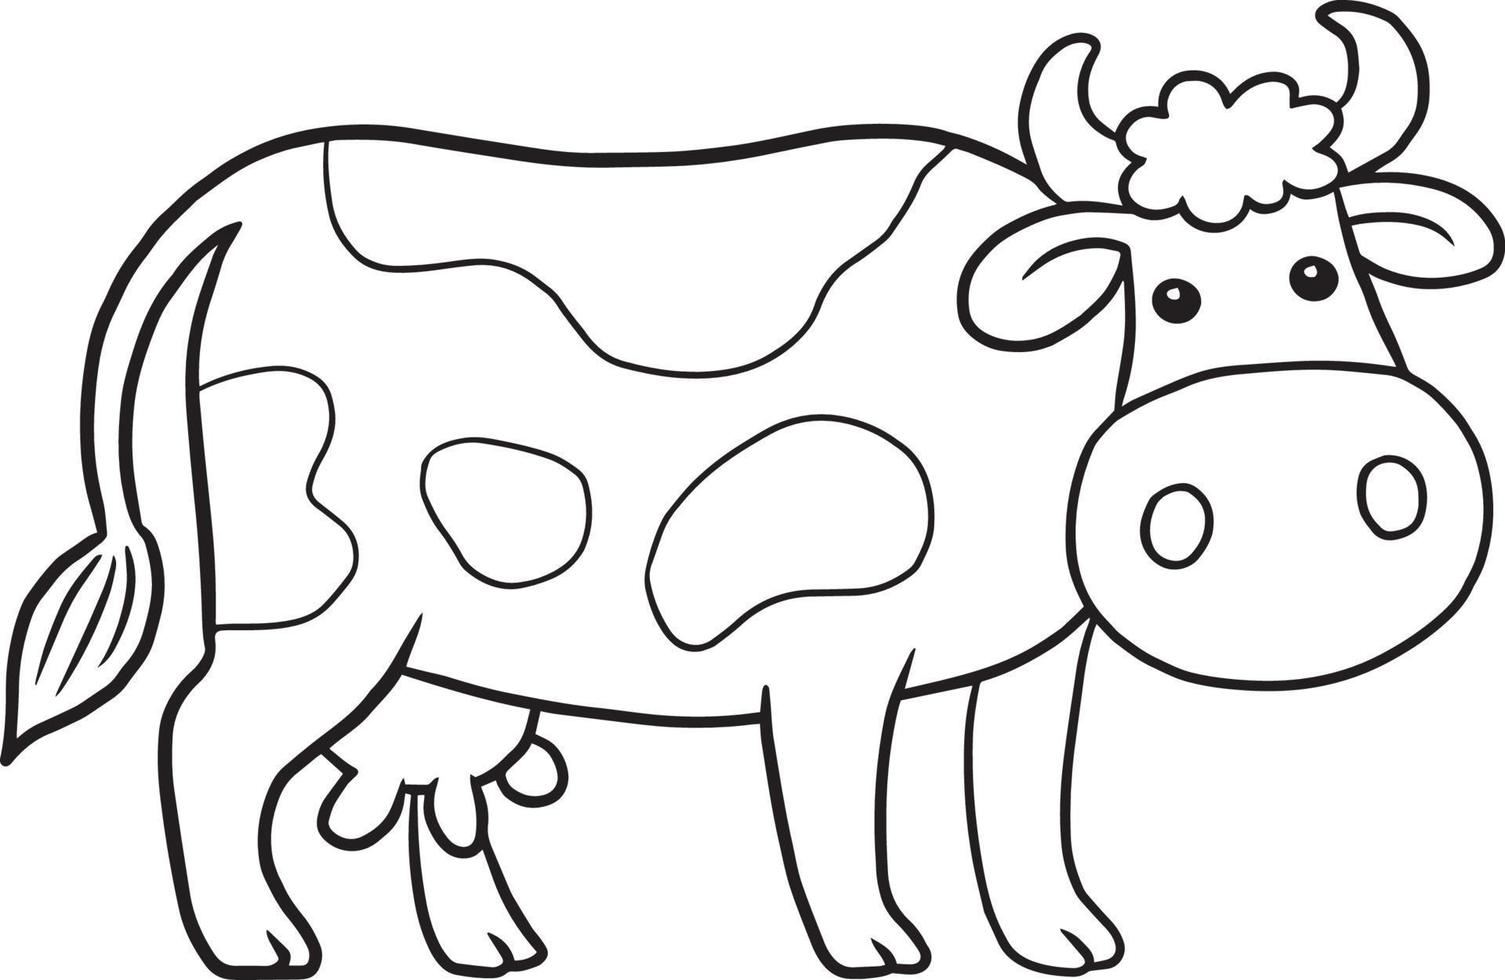 cow doodle cartoon kawaii anime cute coloring page vector